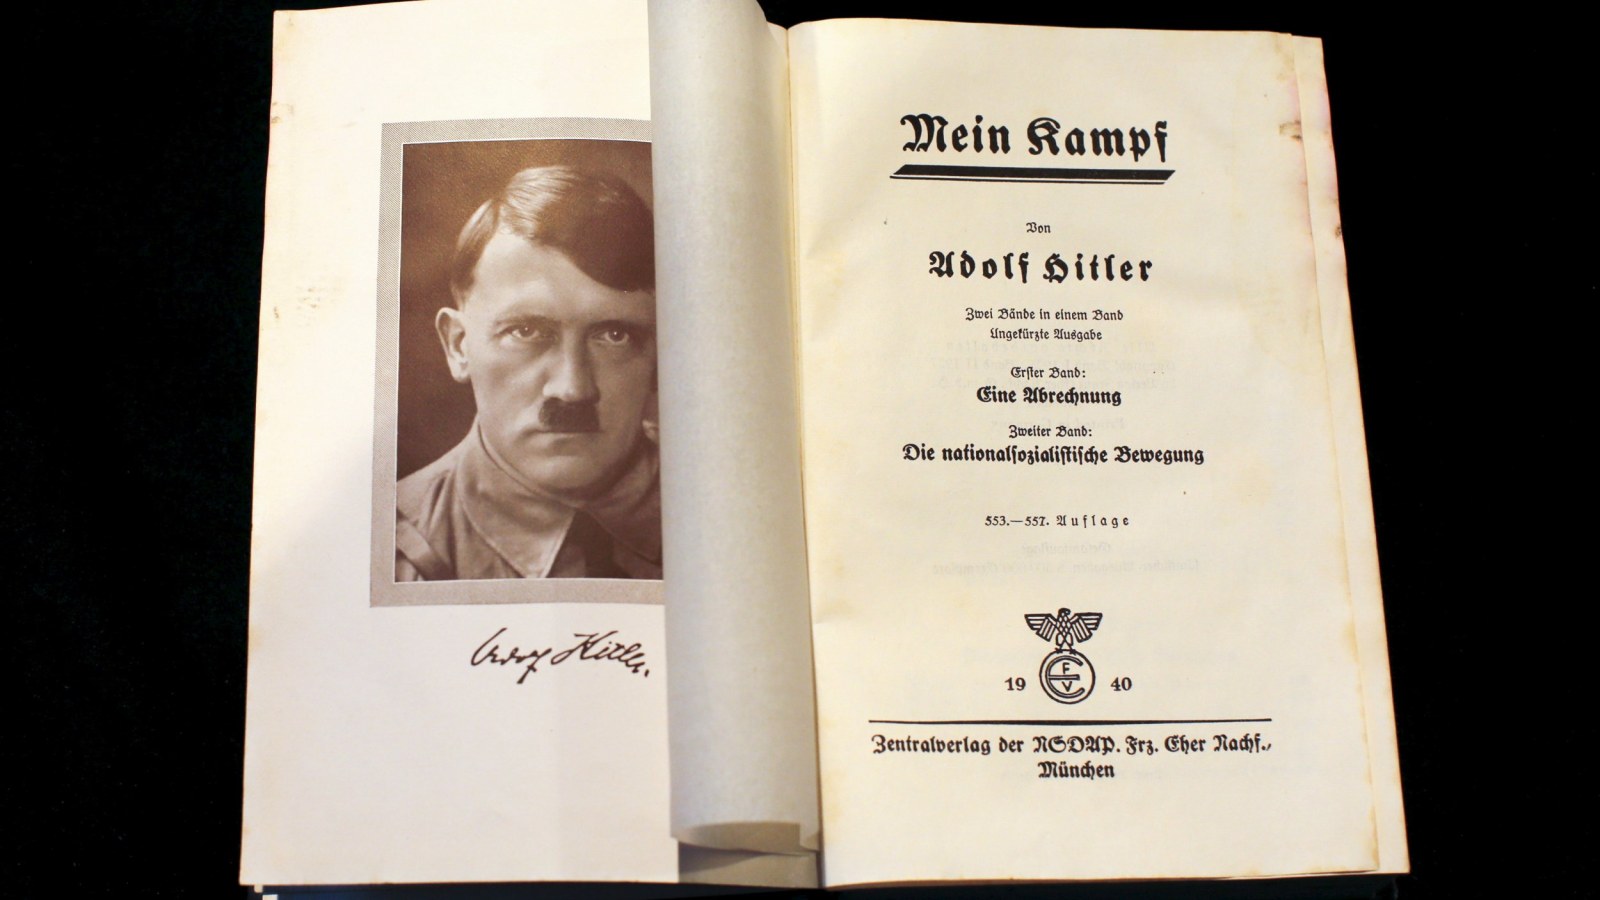 Copyright On Adolf Hitler's 'Mein Kampf' Expires Today